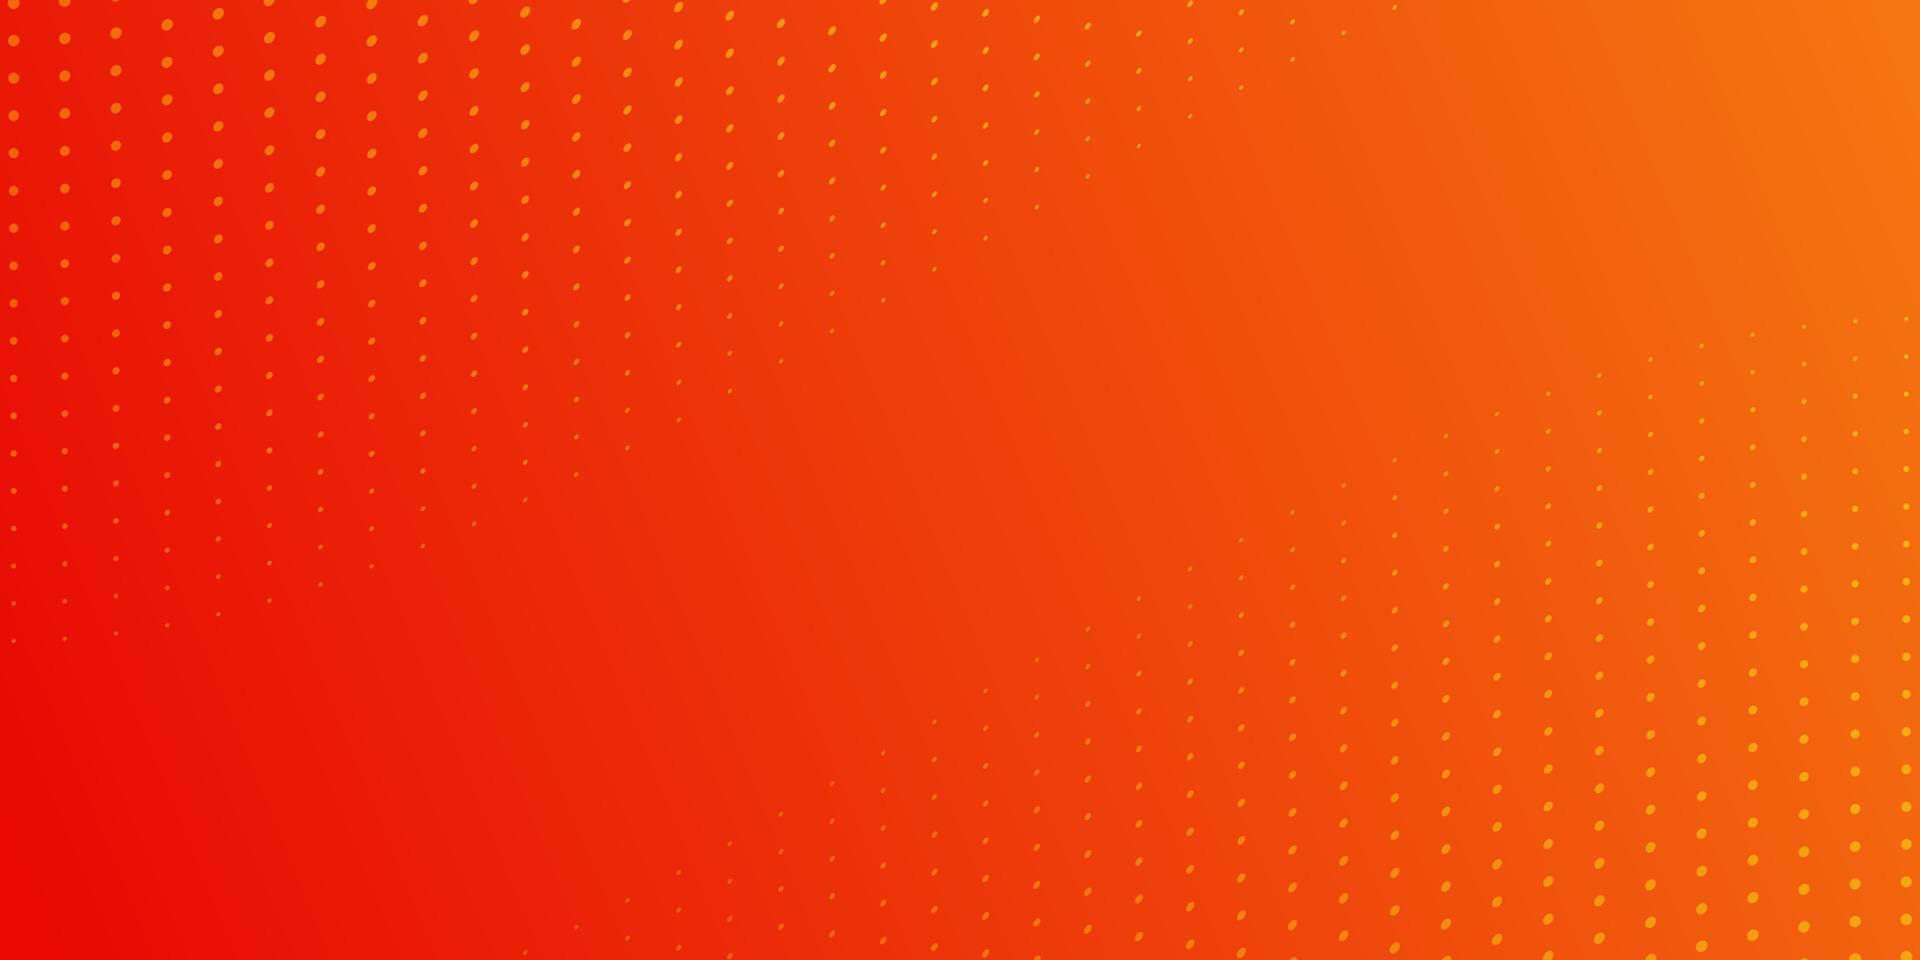 fondo de semitono abstracto naranja. banner creativo con puntos de onda de luz. textura brillante de medio tono con patrón de efecto vibrante. diseño abstracto de papel tapiz moderno. ilustración vectorial vector